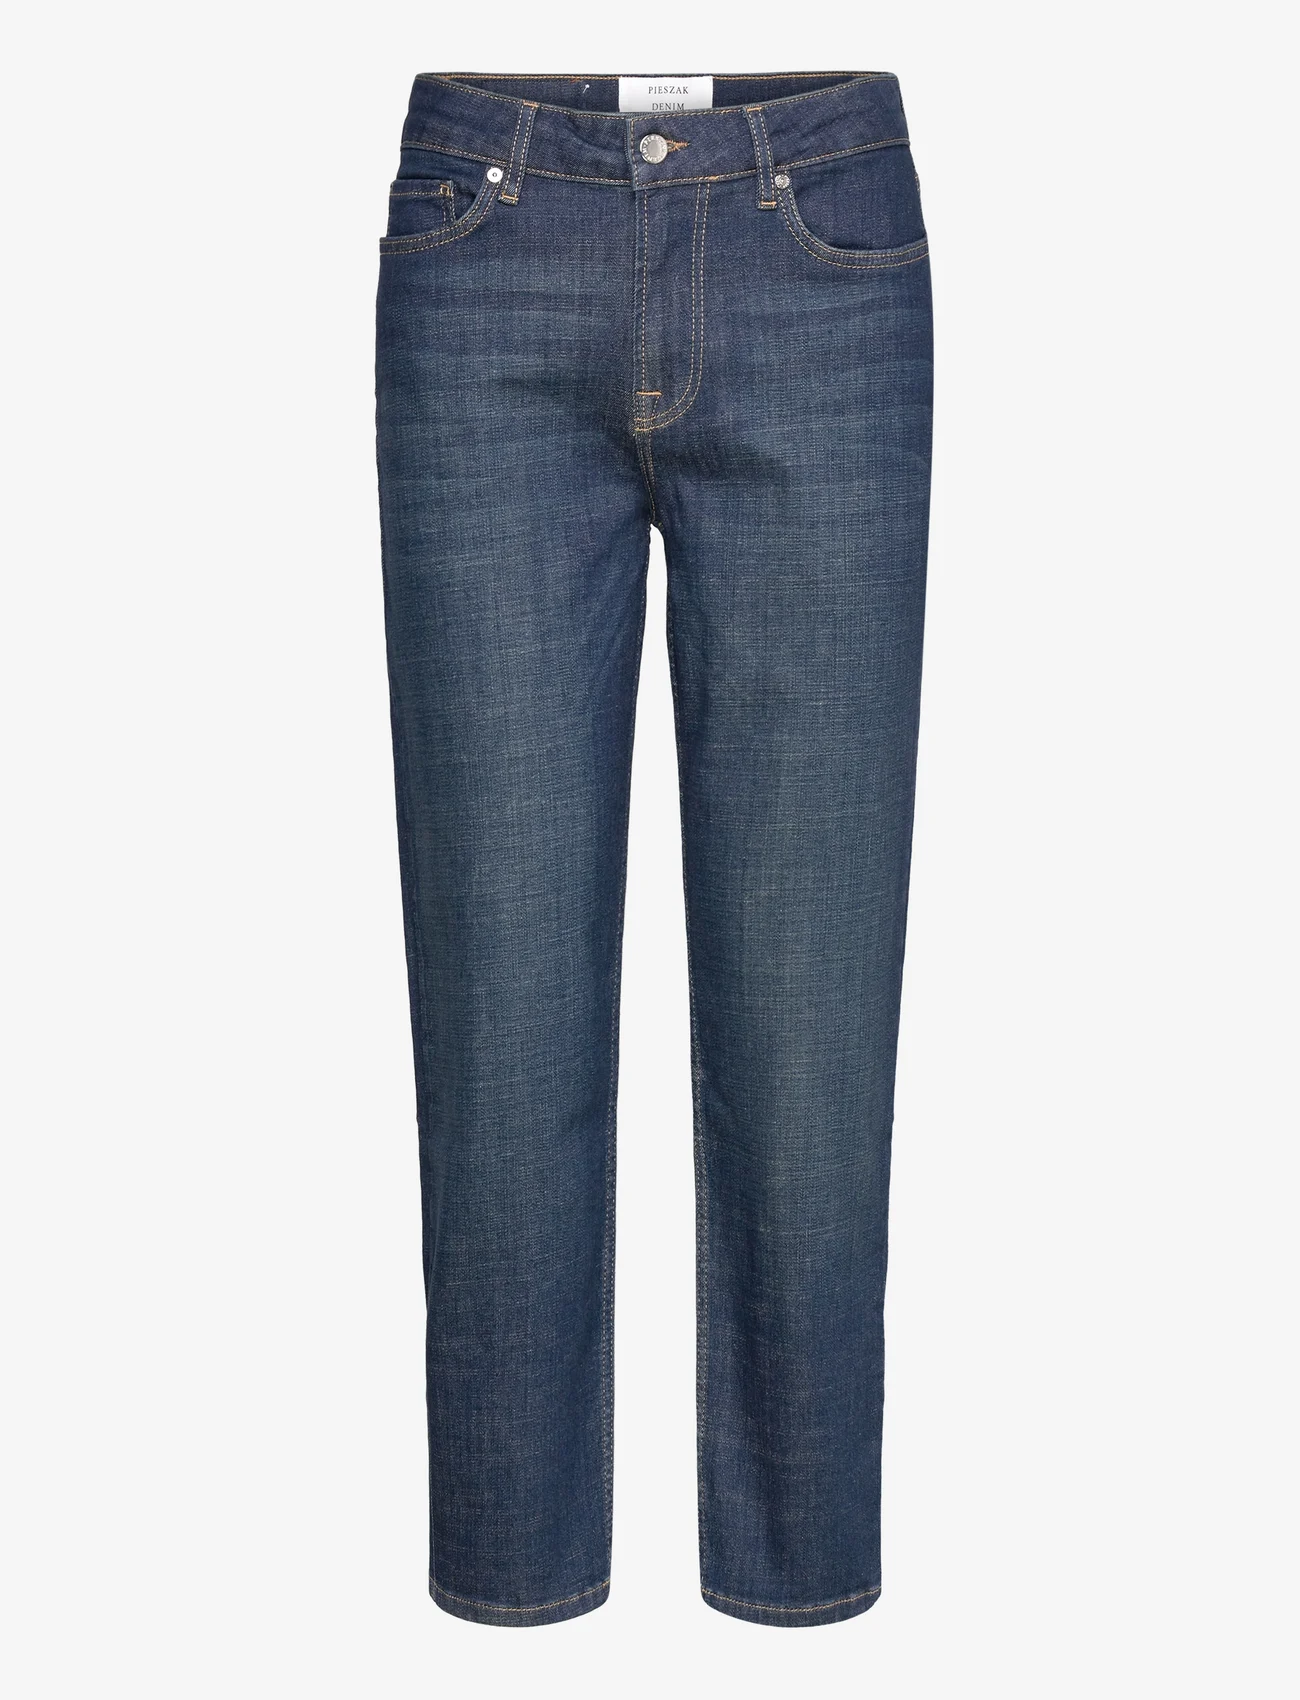 Pieszak - PD-Trisha Jeans Wash Titanium Blue - raka jeans - denim blue - 0